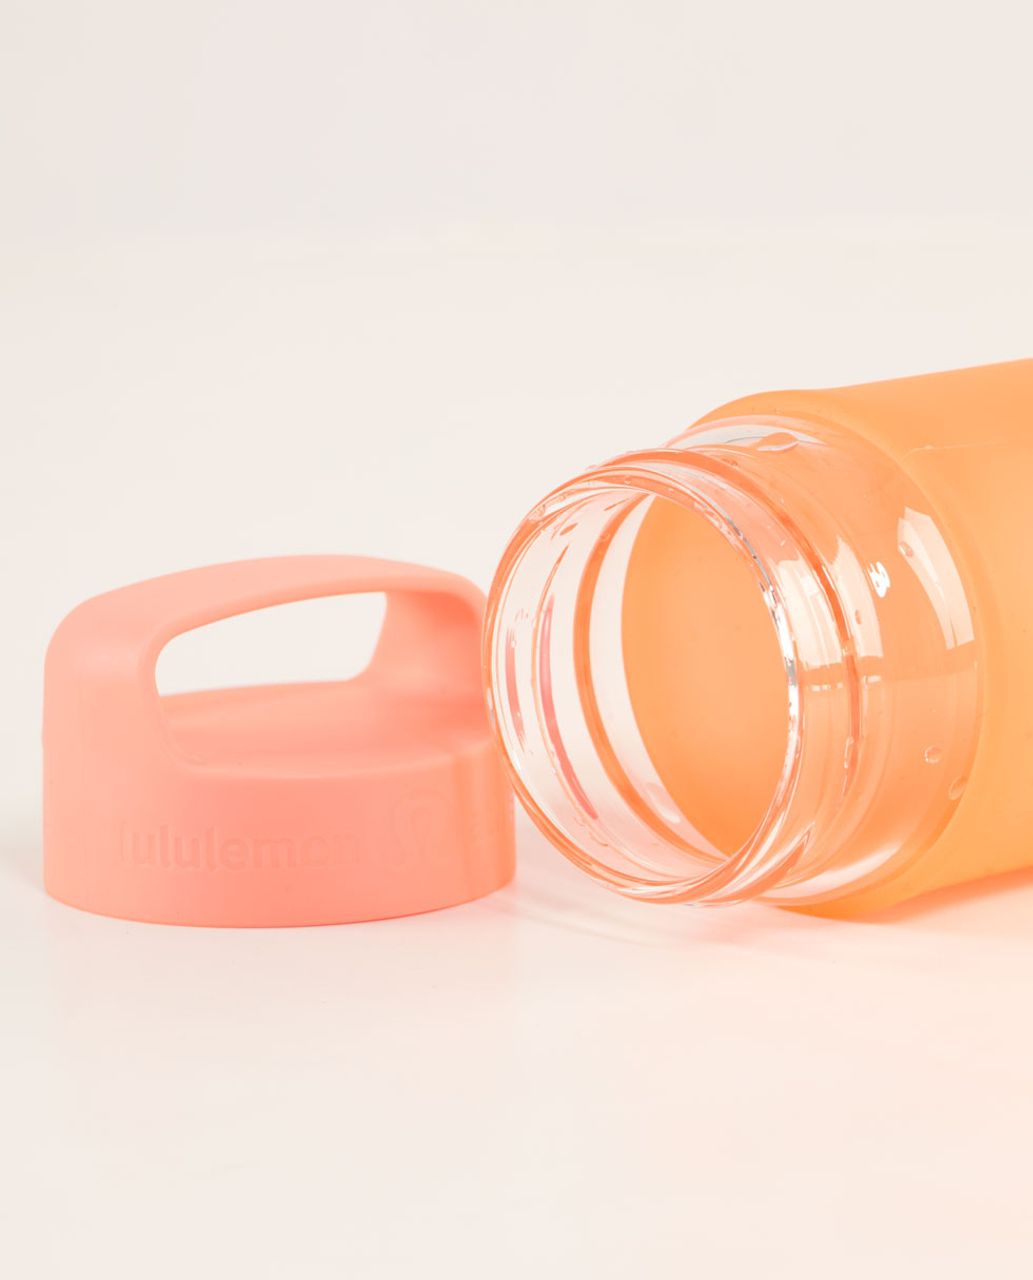 Lululemon Pure Balance Water Bottle - Pop Orange / Bleached Coral